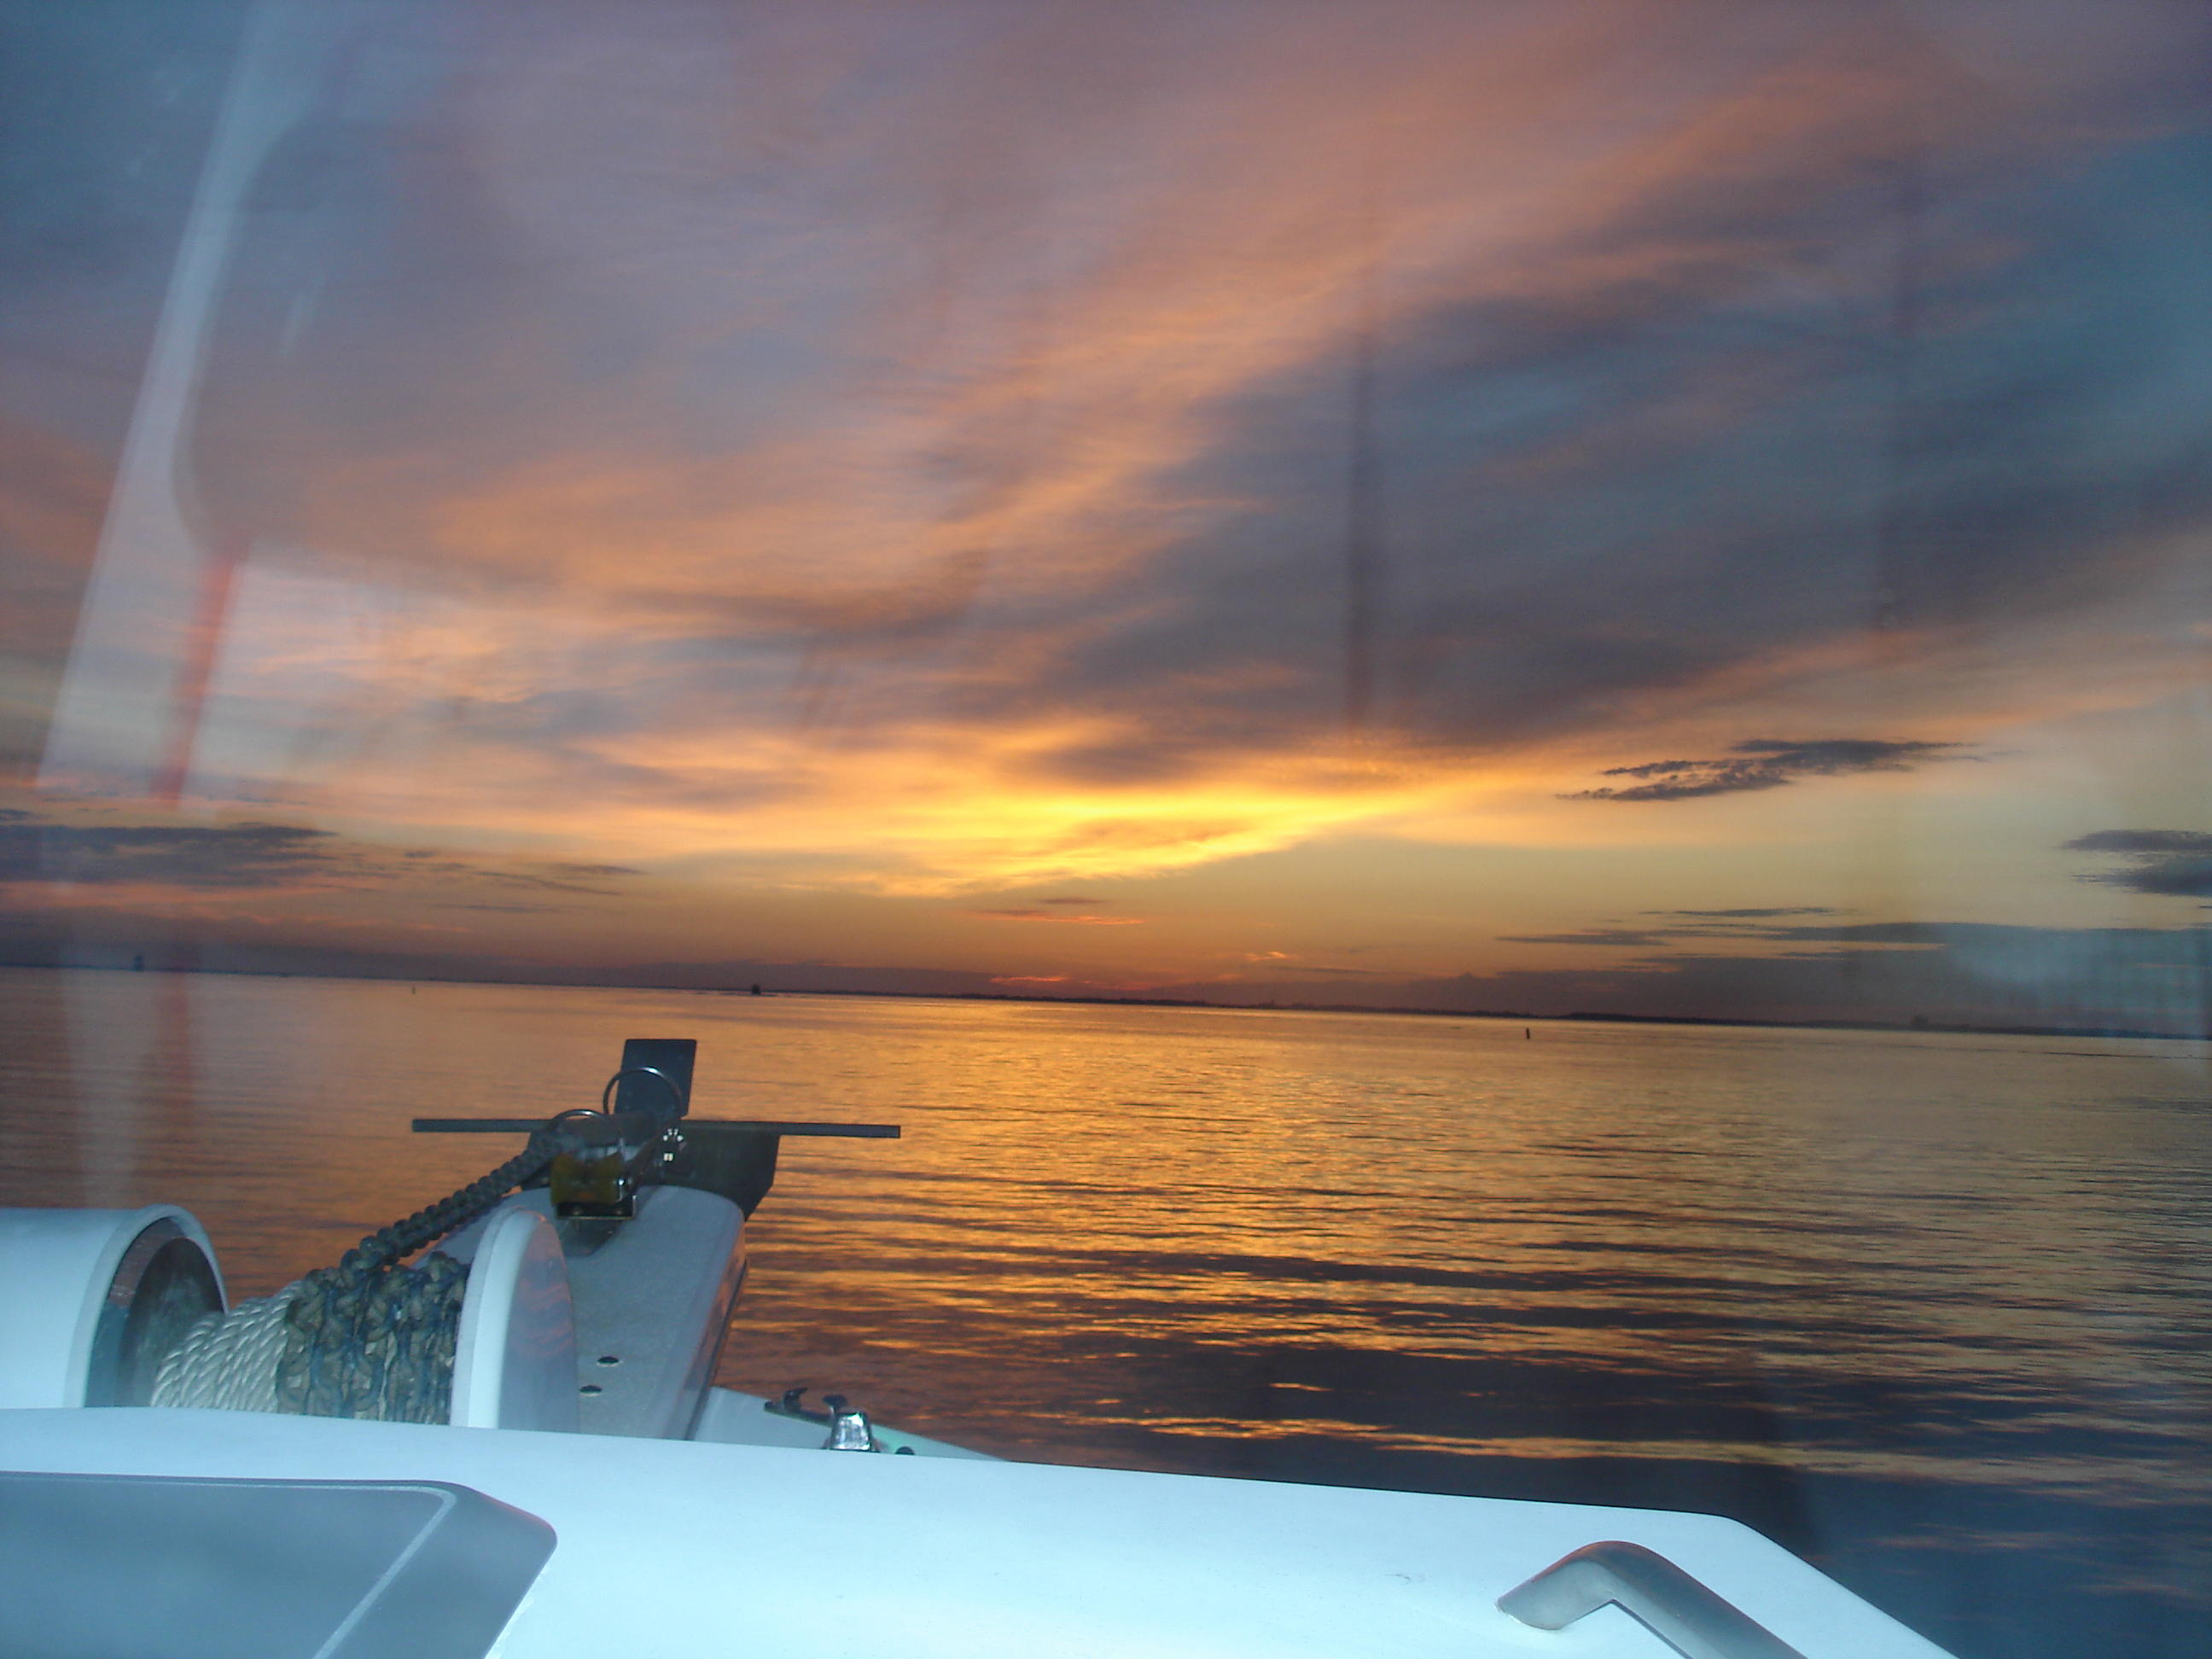 10/2010 Daybreak on the Chesapeake